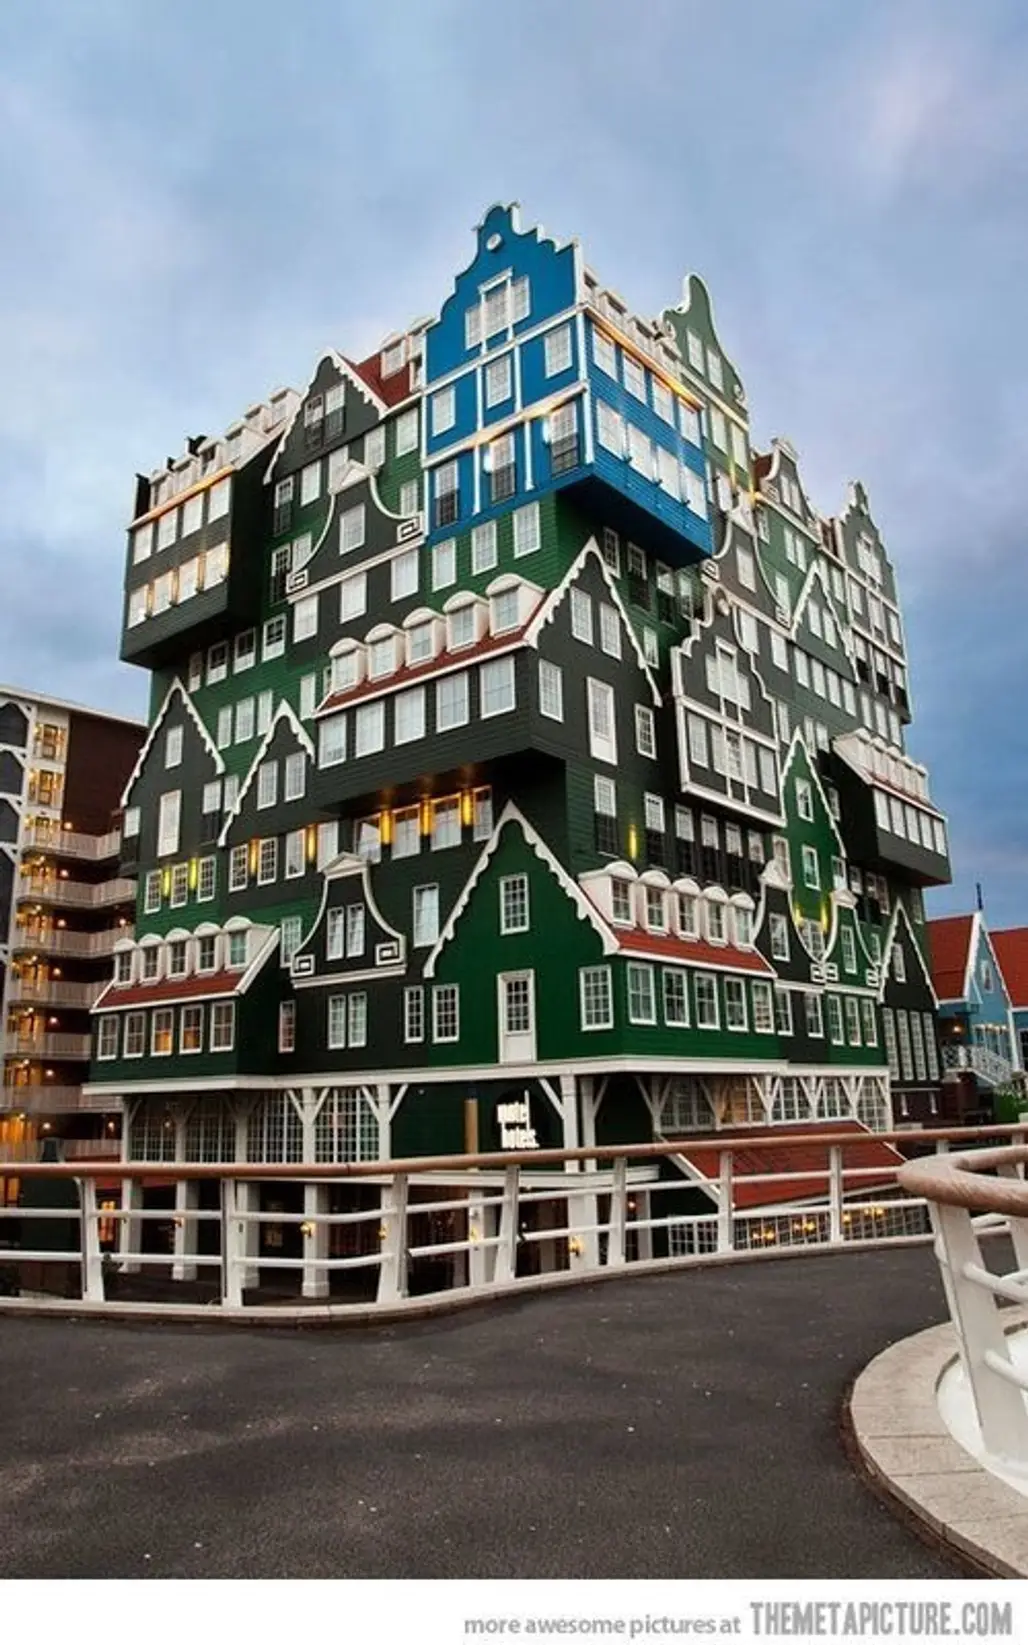 Inntel Hotel, Amsterdam, the Netherlands